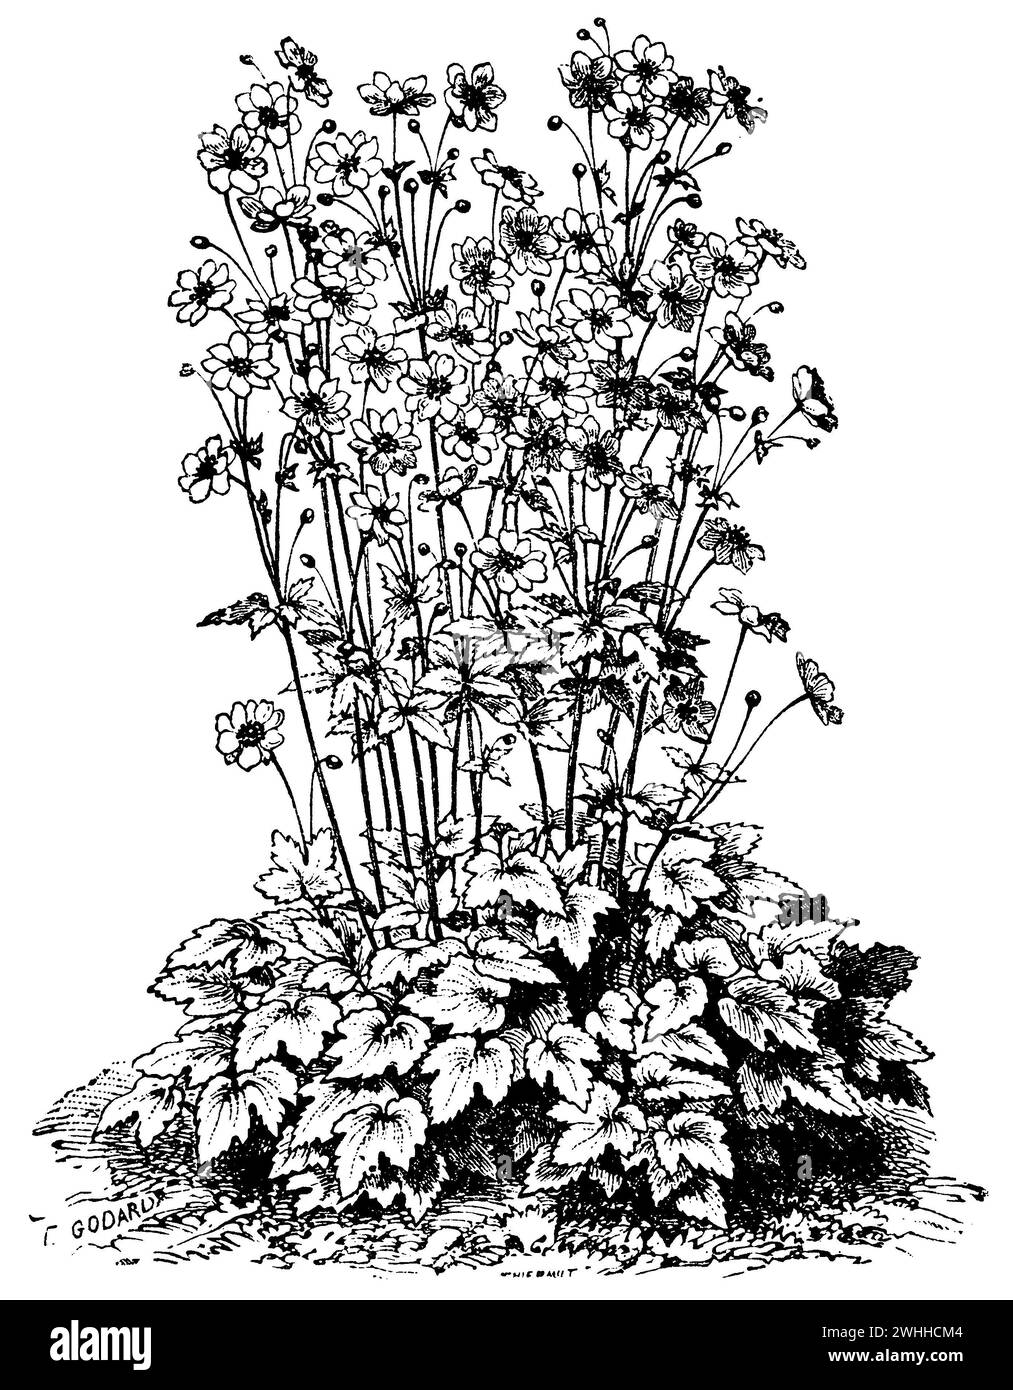 Thimbleweed japonais, Anemone hupehensis, (livre de jardin, 1877), Herbst-Anemone, anémone hupehensis Banque D'Images